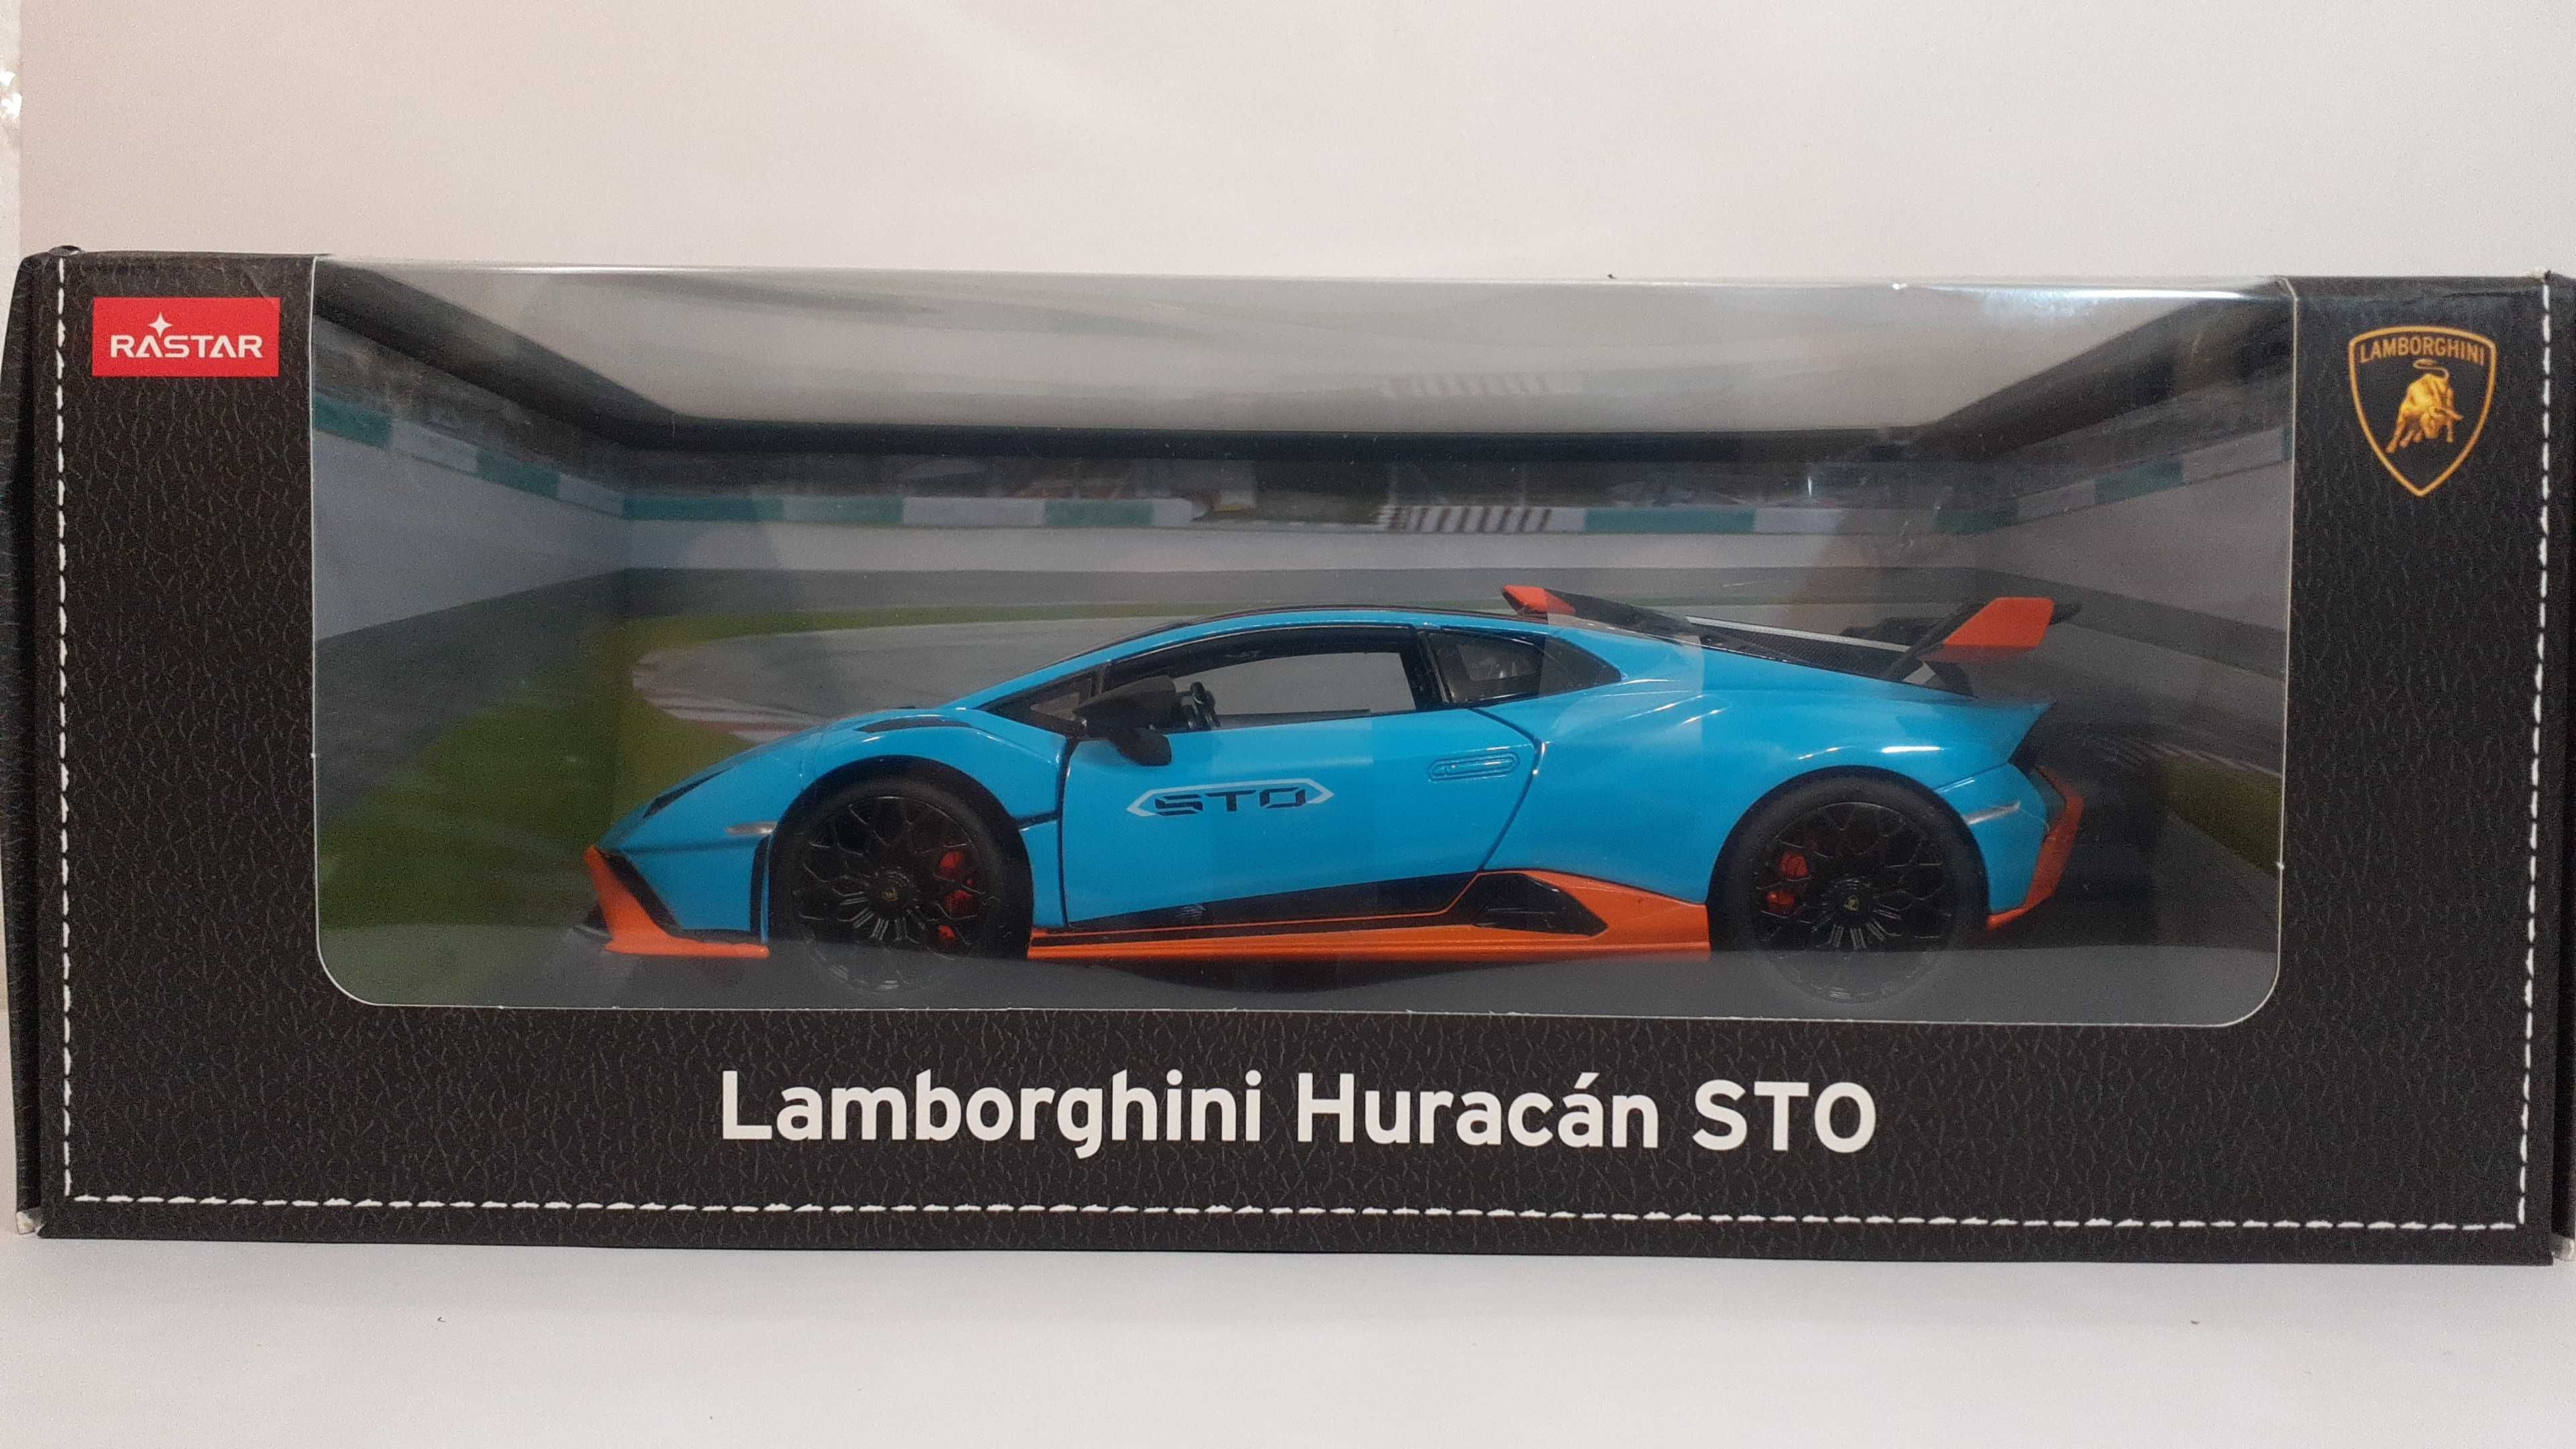 1/18 Lamborghini Huracan STO - Rastar